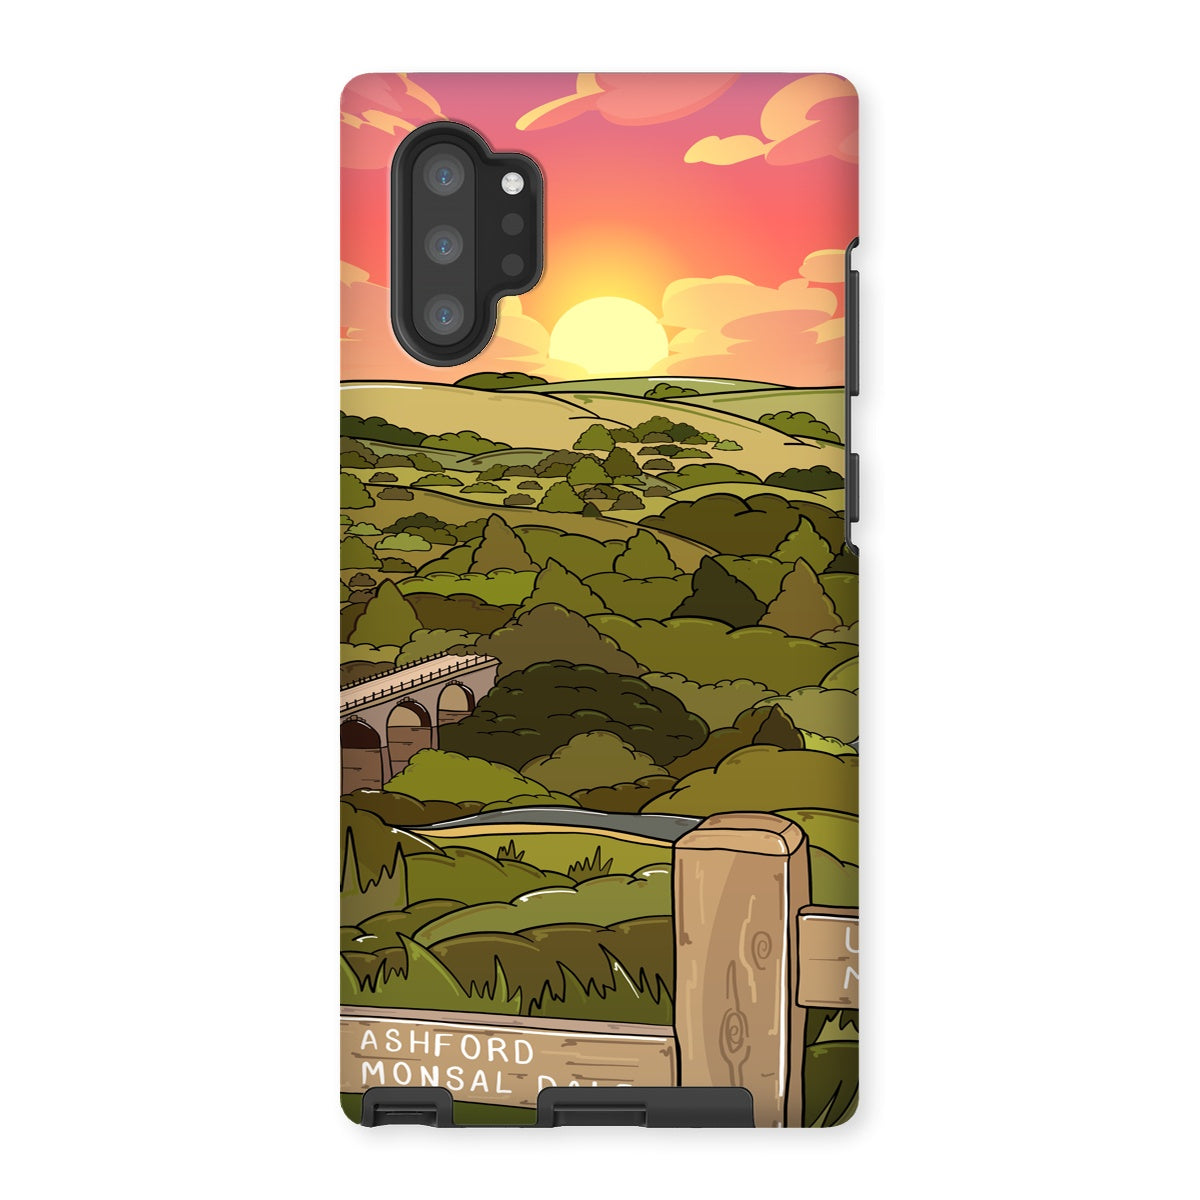 Monsal Head - Into the sunset Tough Phone Case